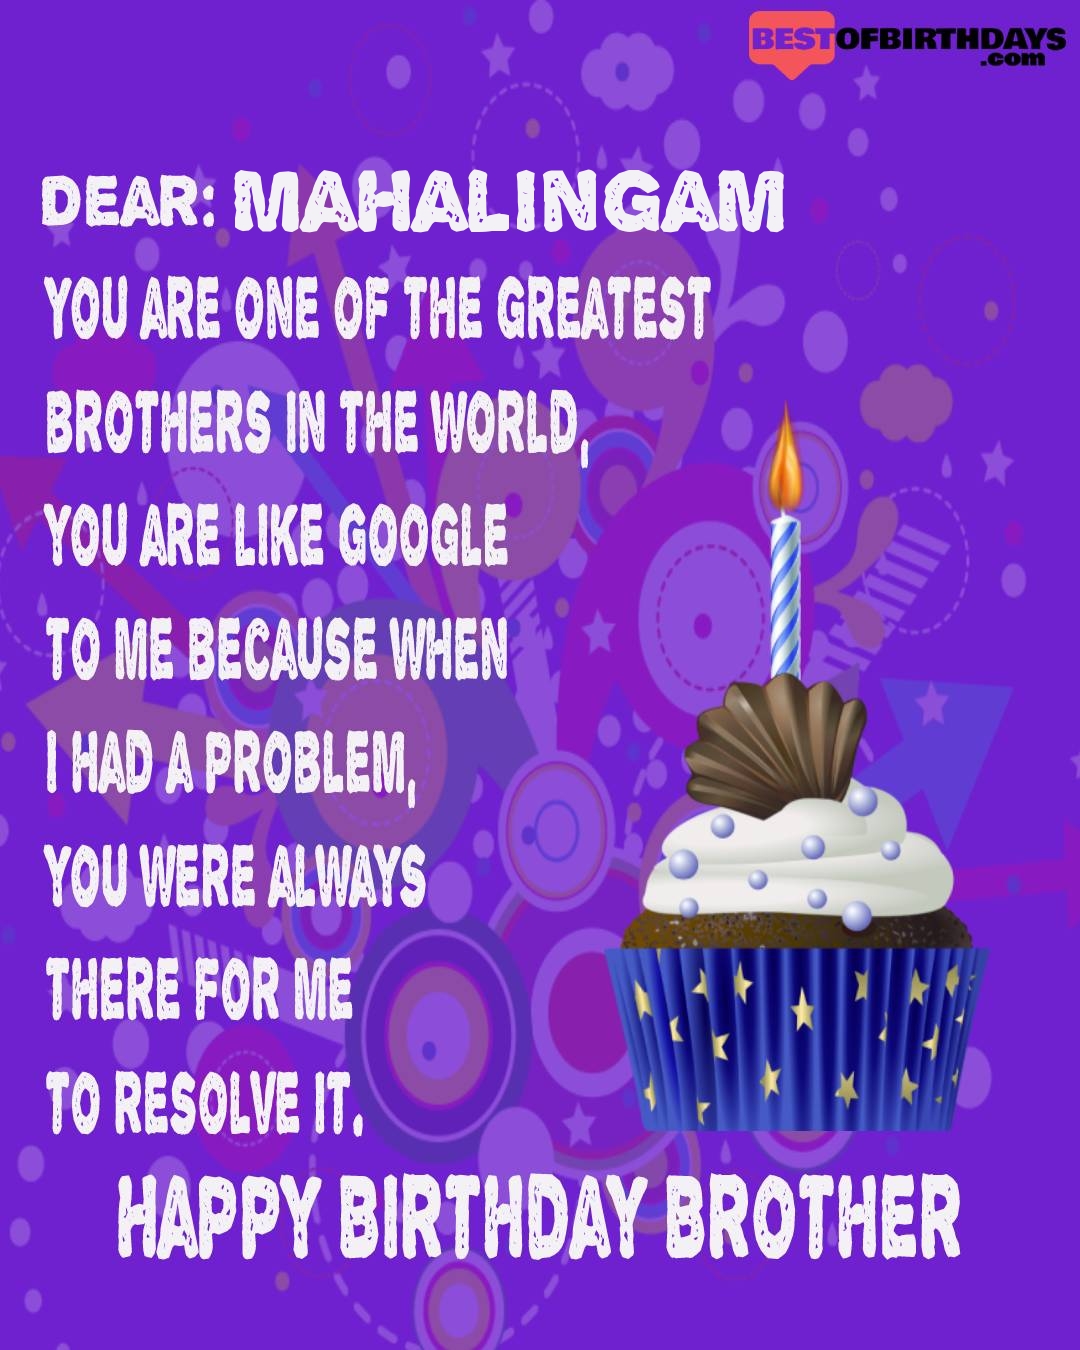 Happy birthday mahalingam bhai brother bro